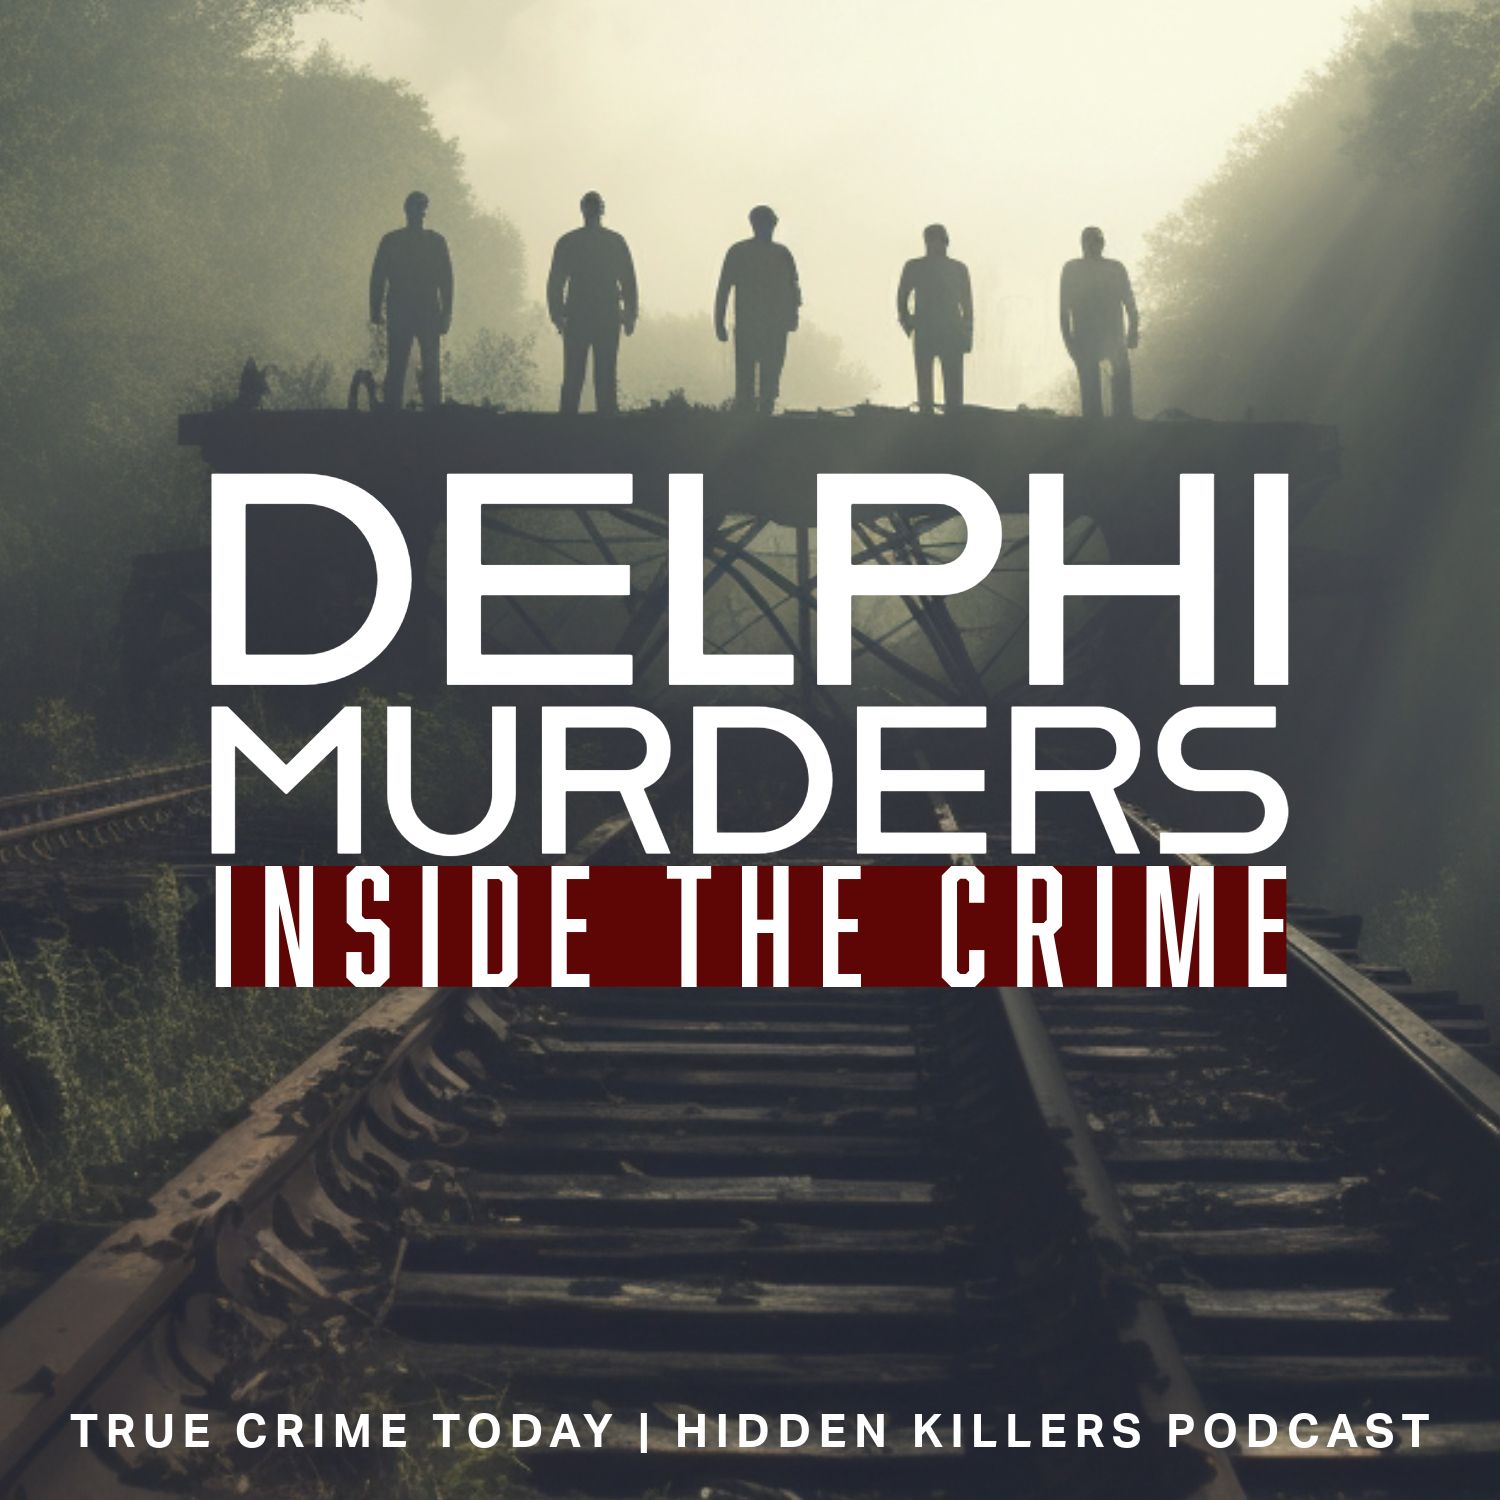 Delphi Murder Trial Of Richard Allen Delayed, Defense Attorney Bob Motta Explains Why